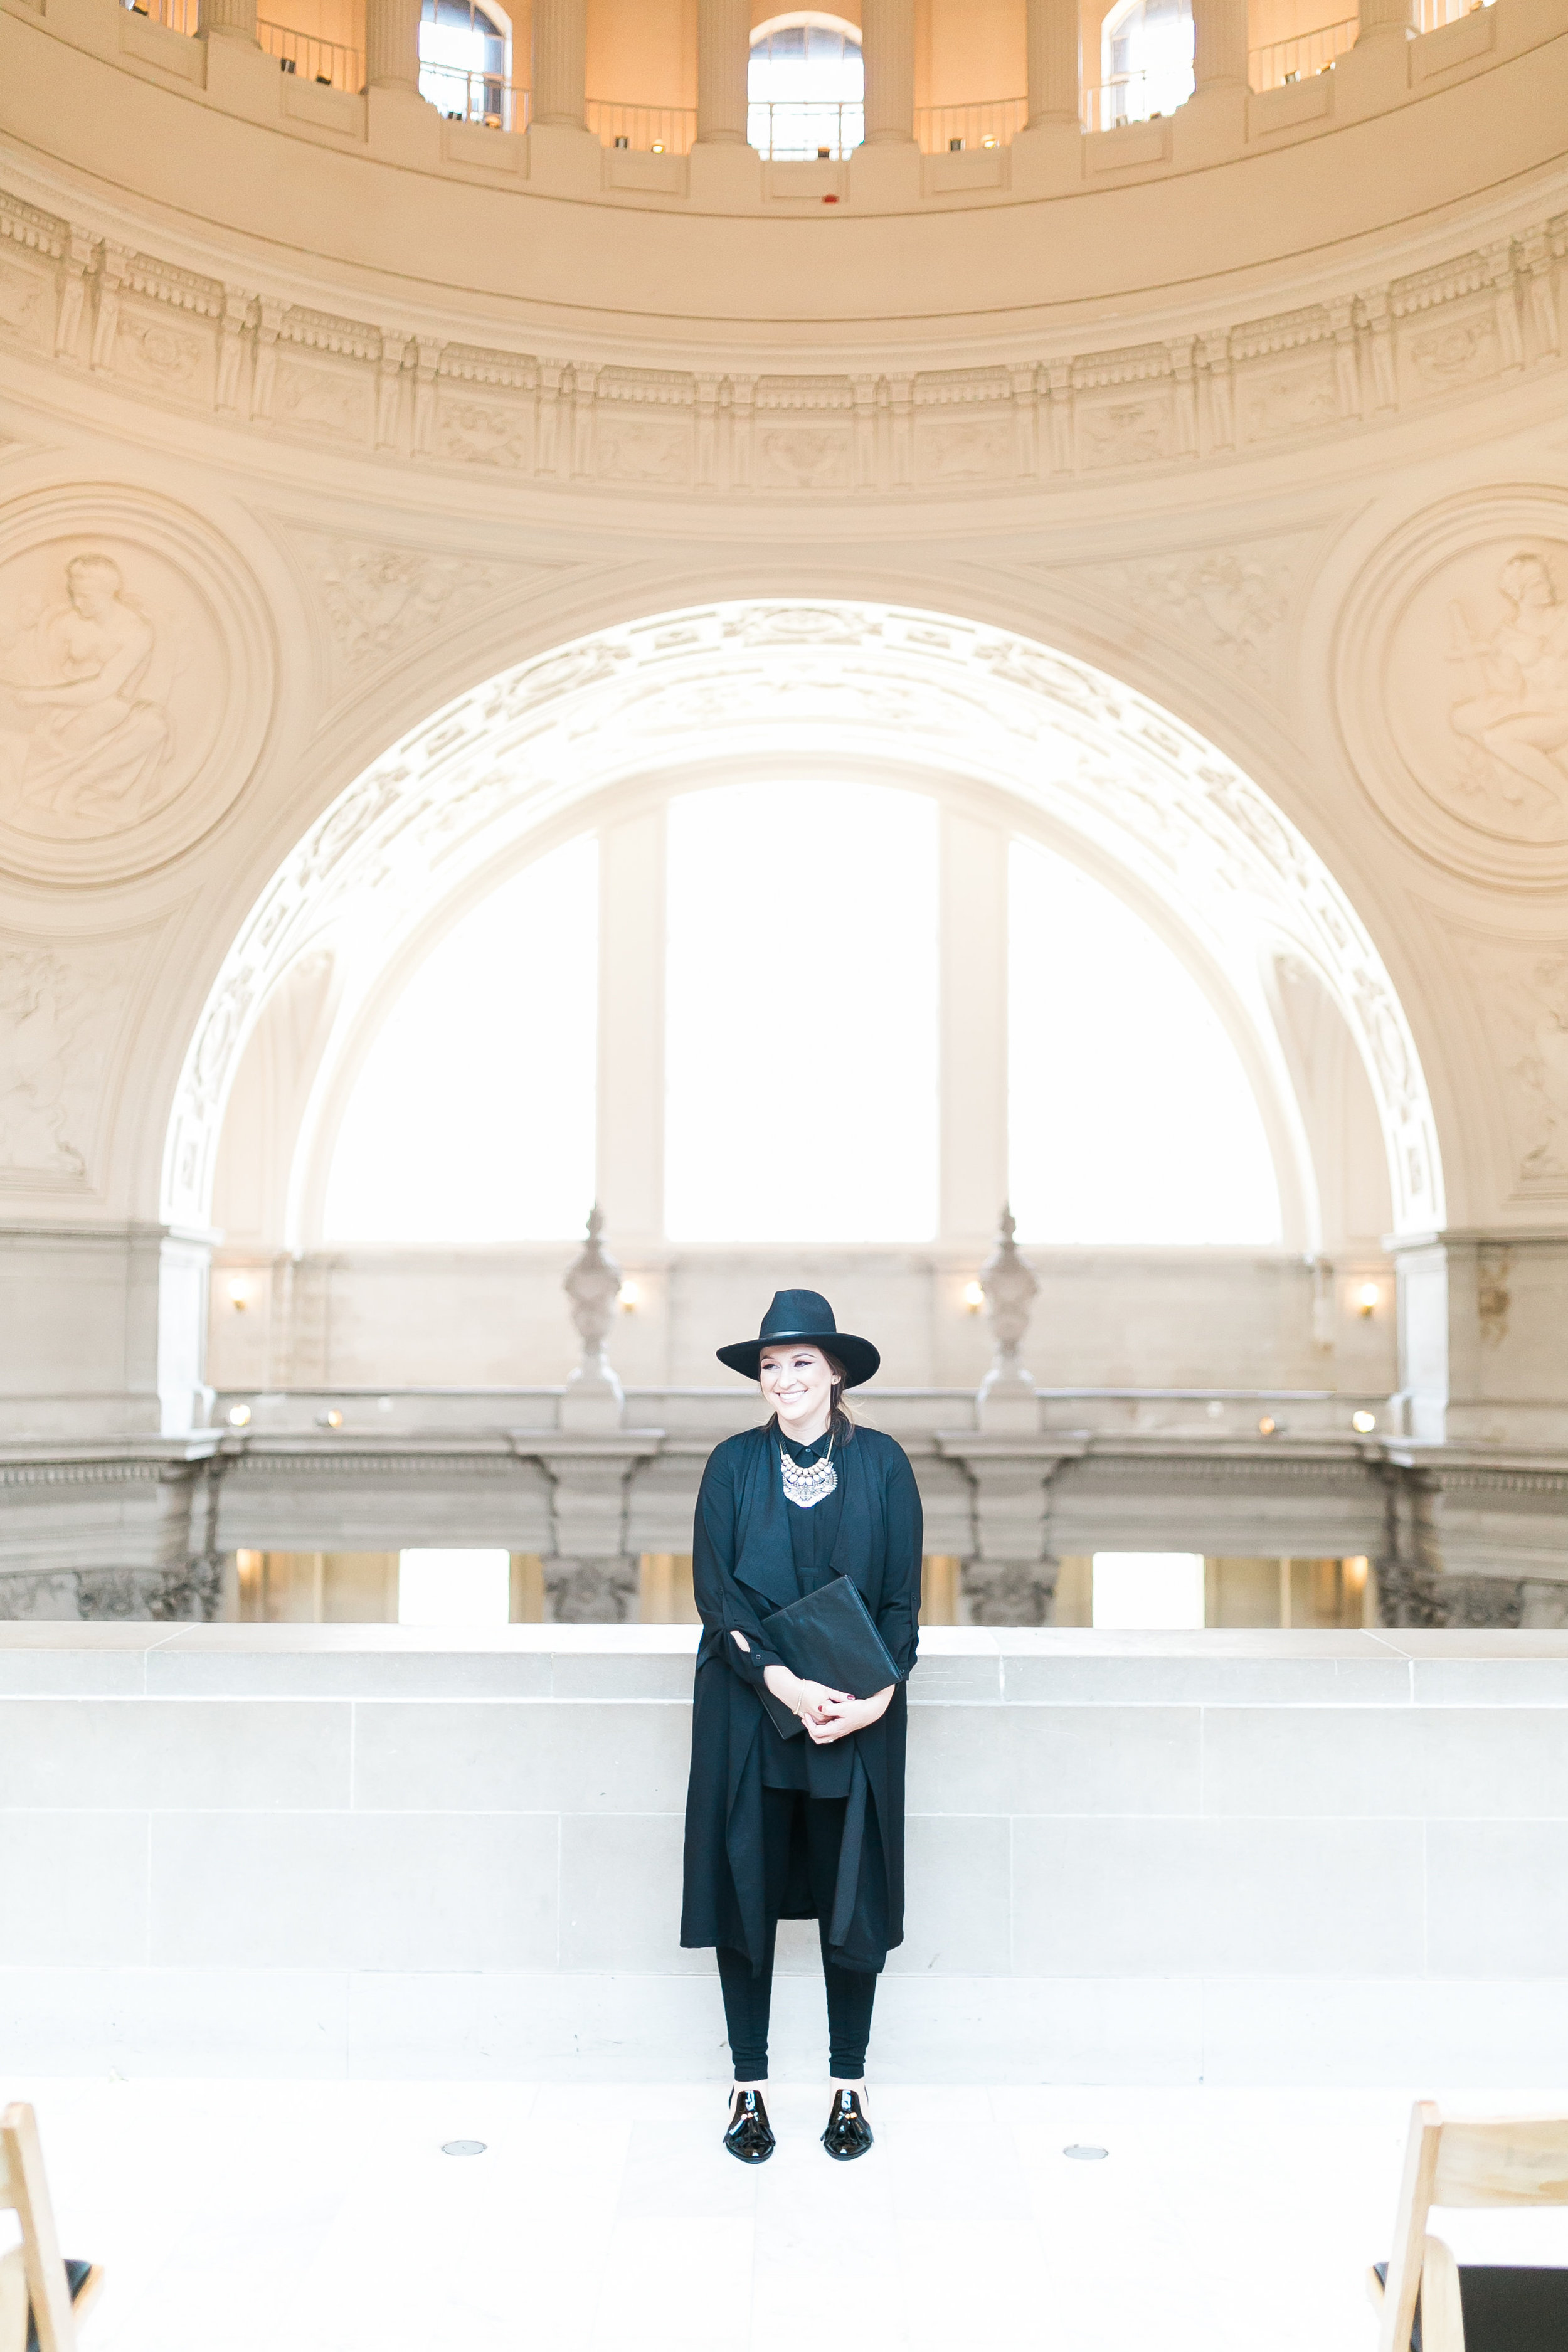 An Intimate San Francisco City Hall Wedding - J.Anne Photography -- Wedding Blog - The Overwhelmed Bride